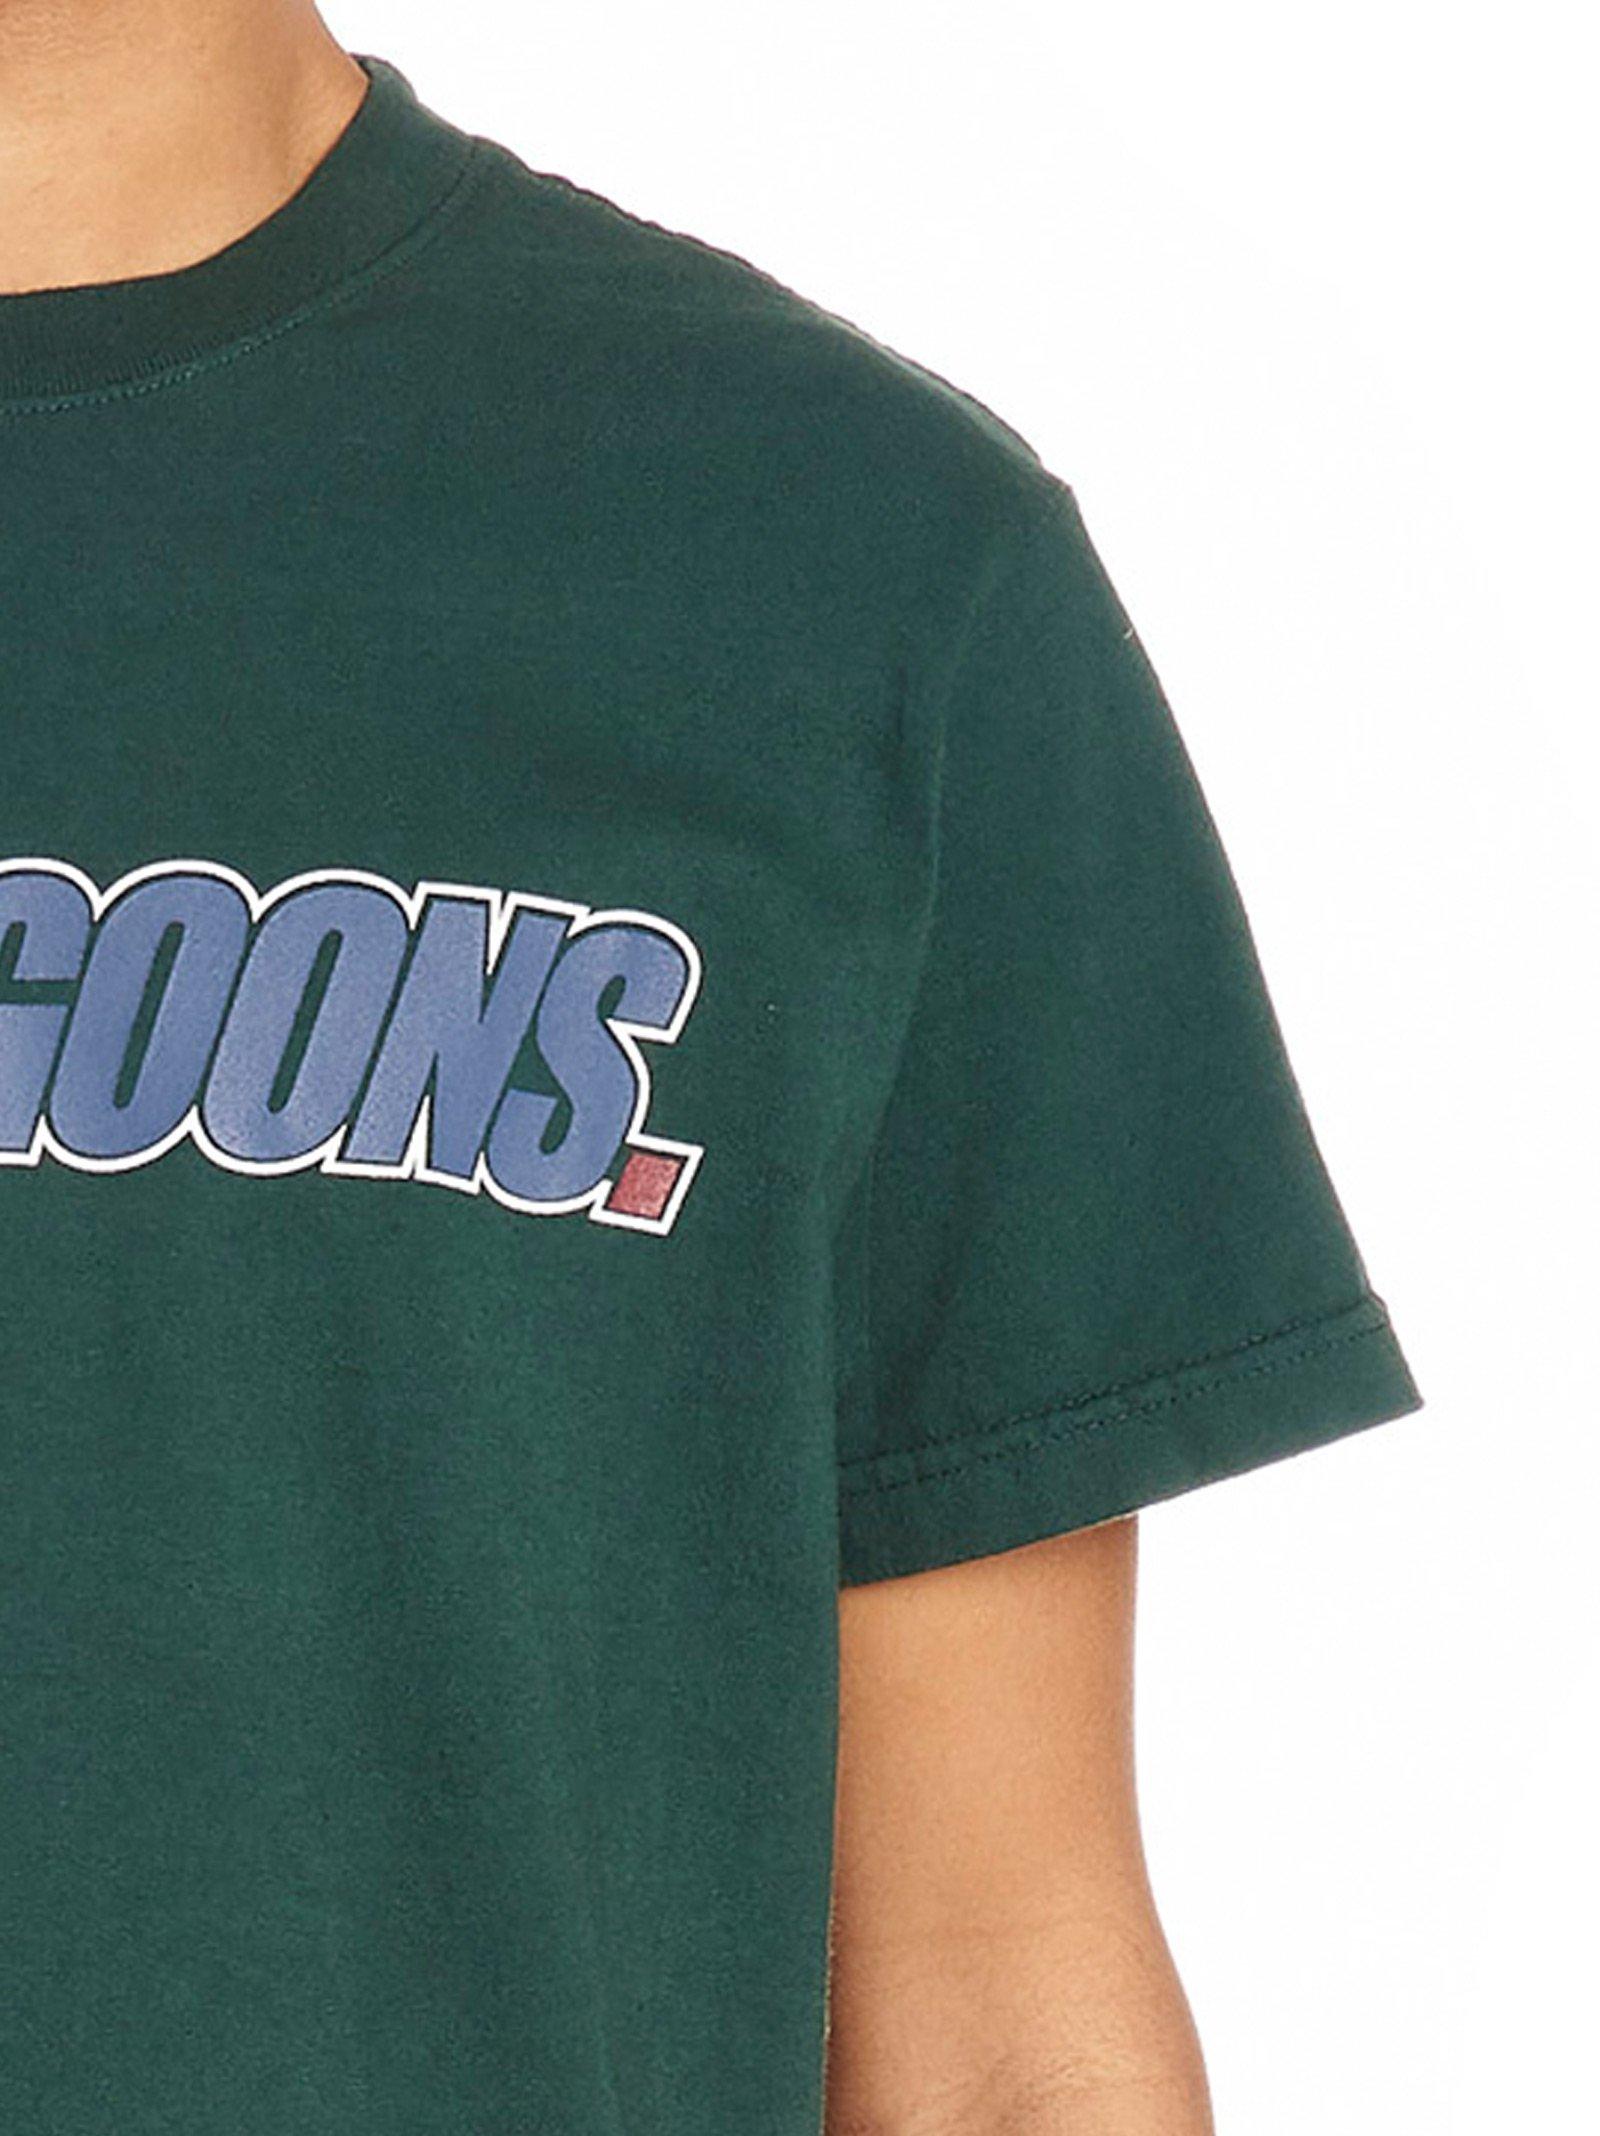 Noon Goons Cotton Logo Vm T-shirt in Green for Men - Lyst